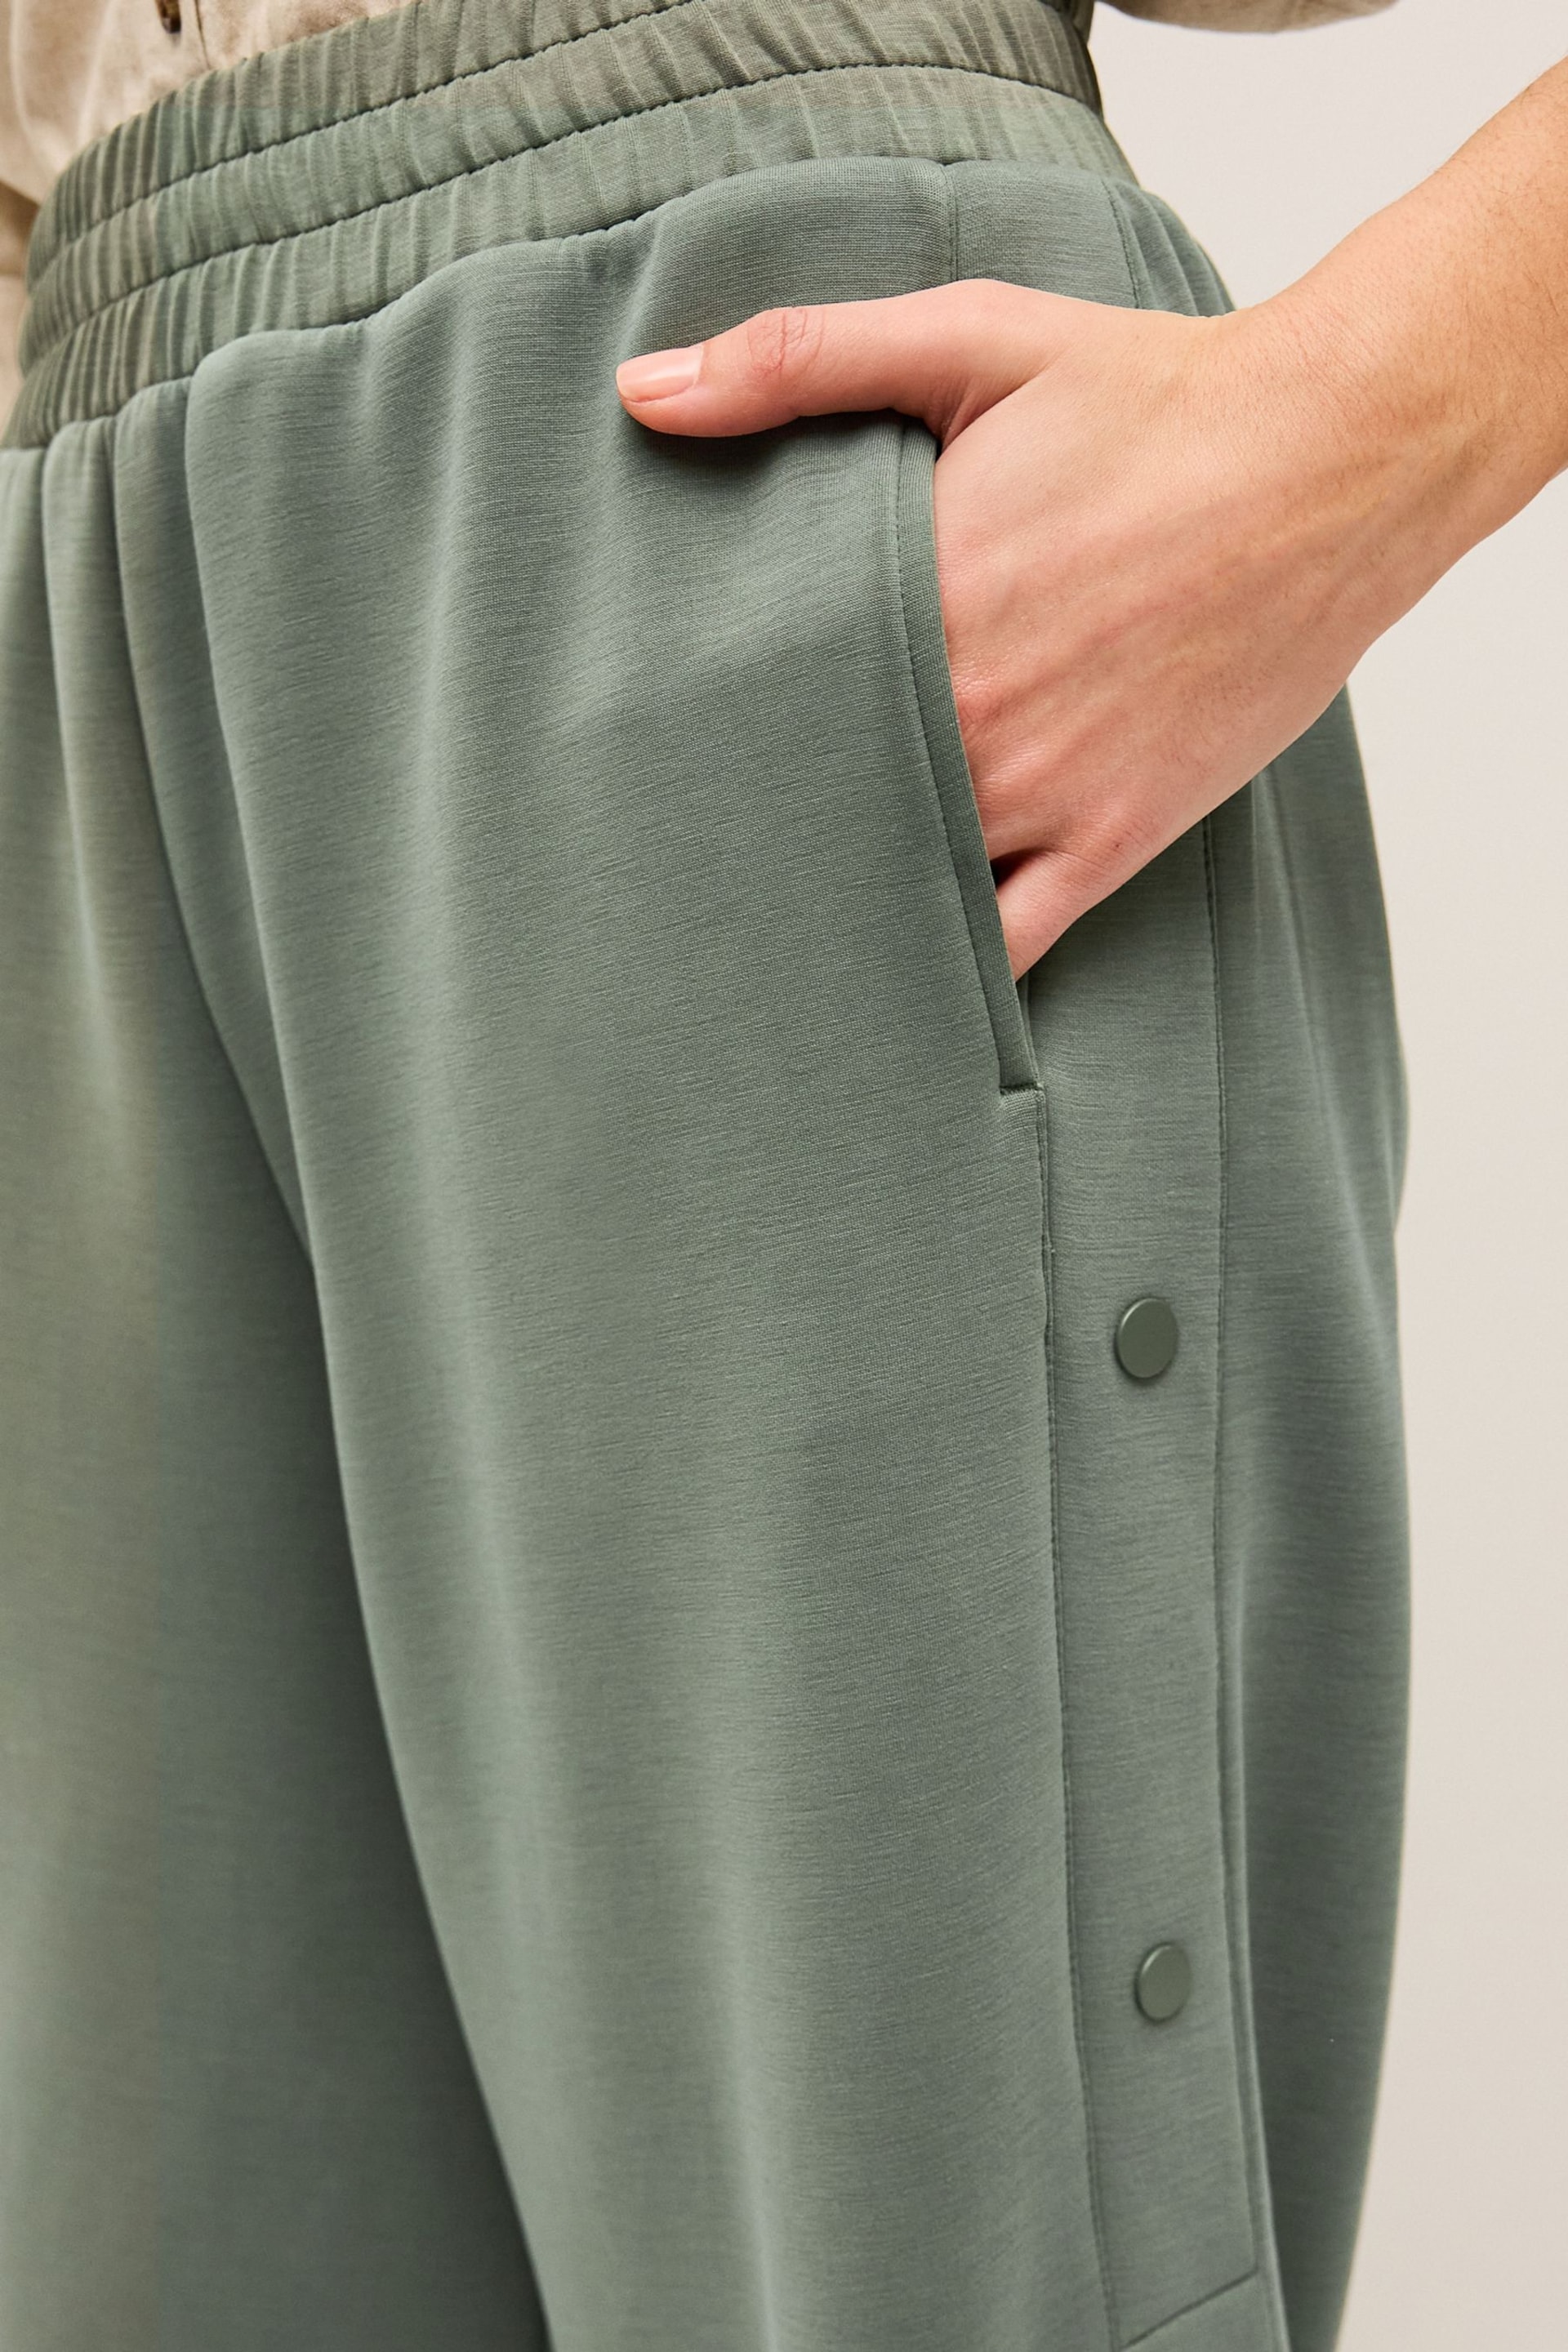 Khaki Green Soft Jersey Popper Side Trousers - Image 4 of 6